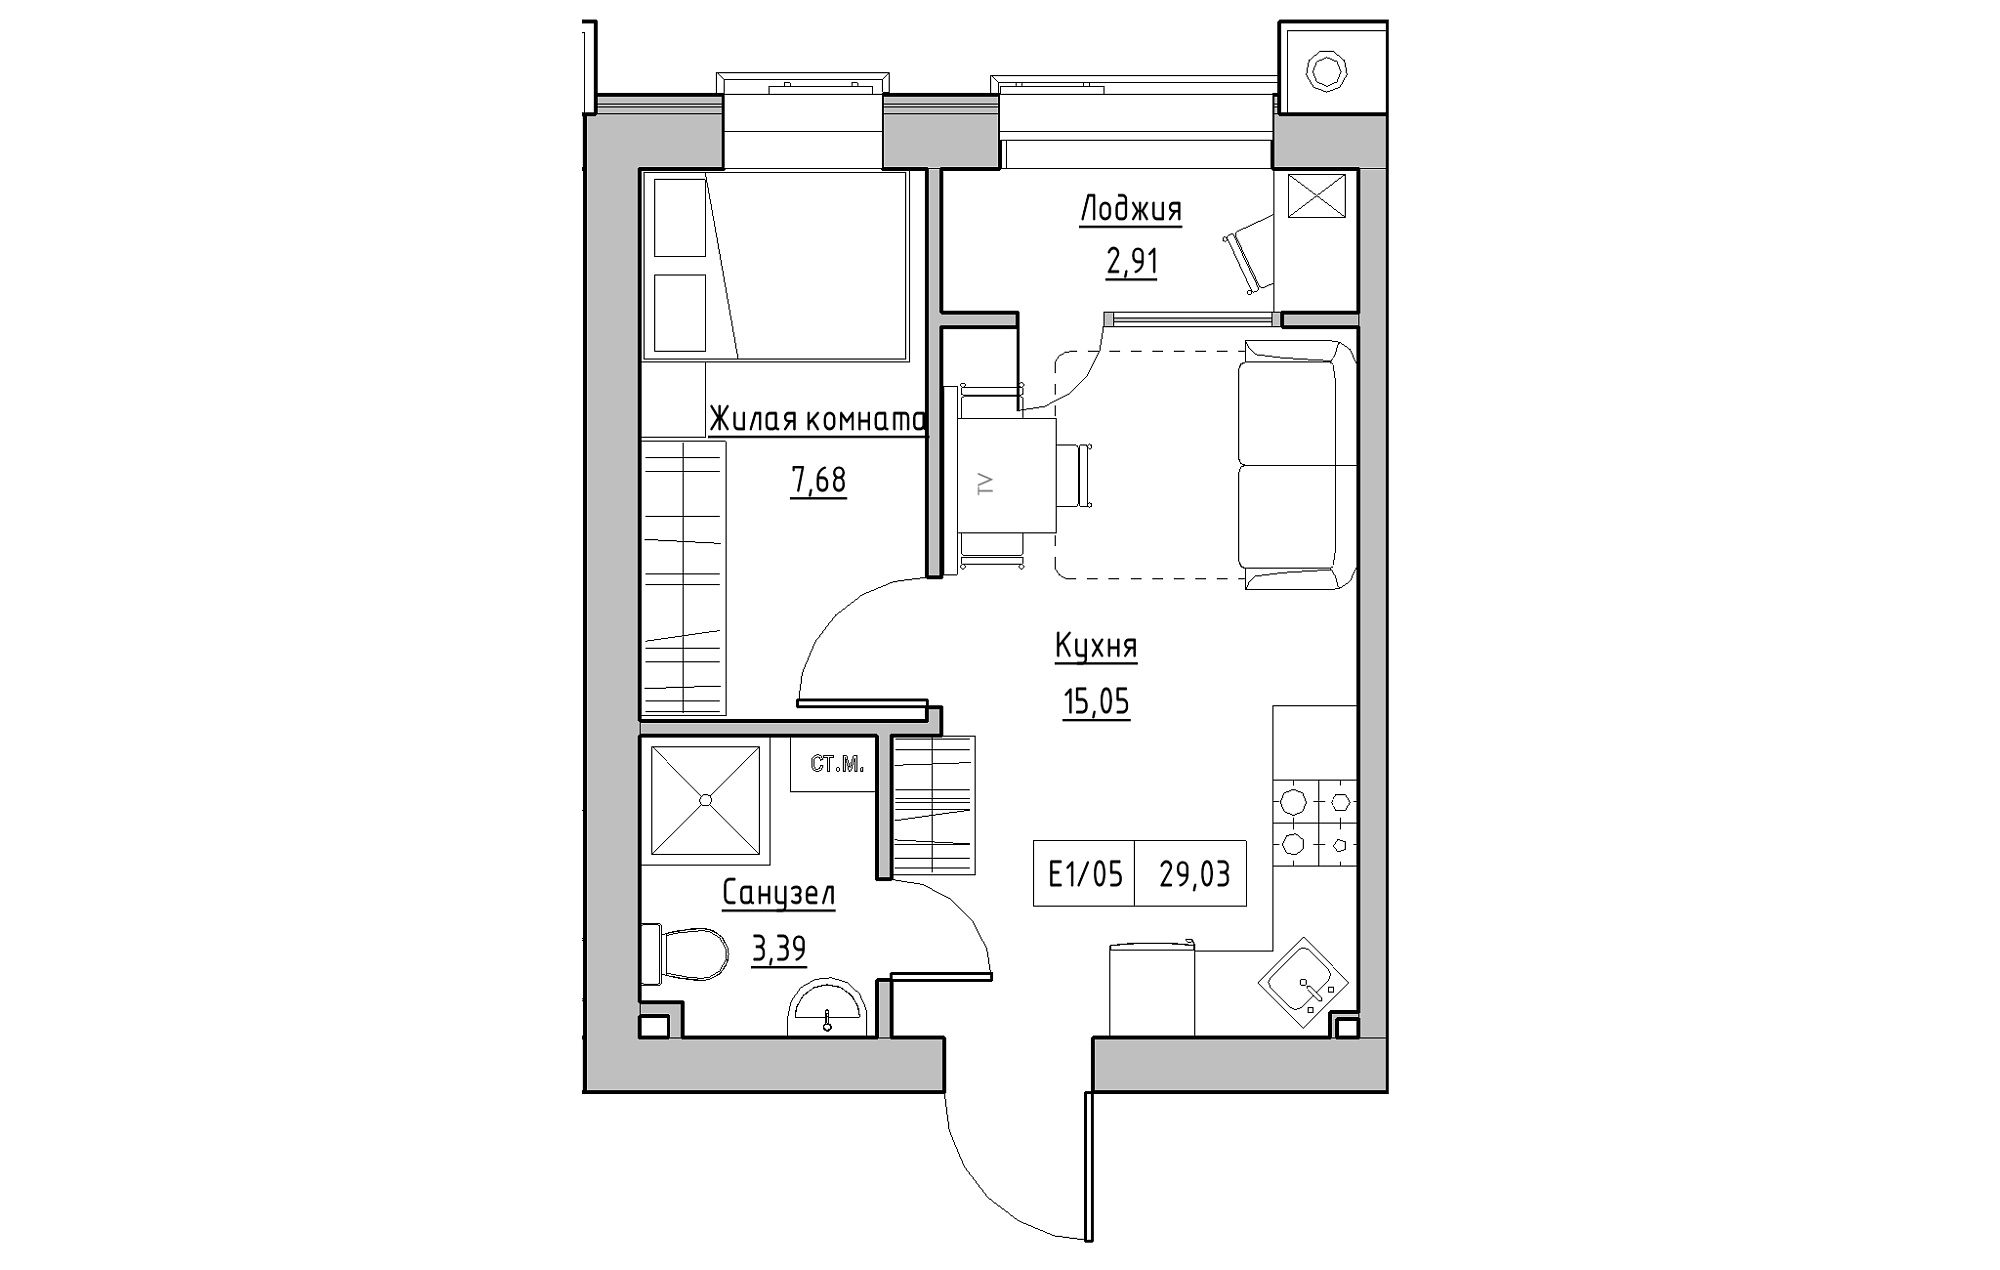 Planning 1-rm flats area 29.03m2, KS-013-04/0007.